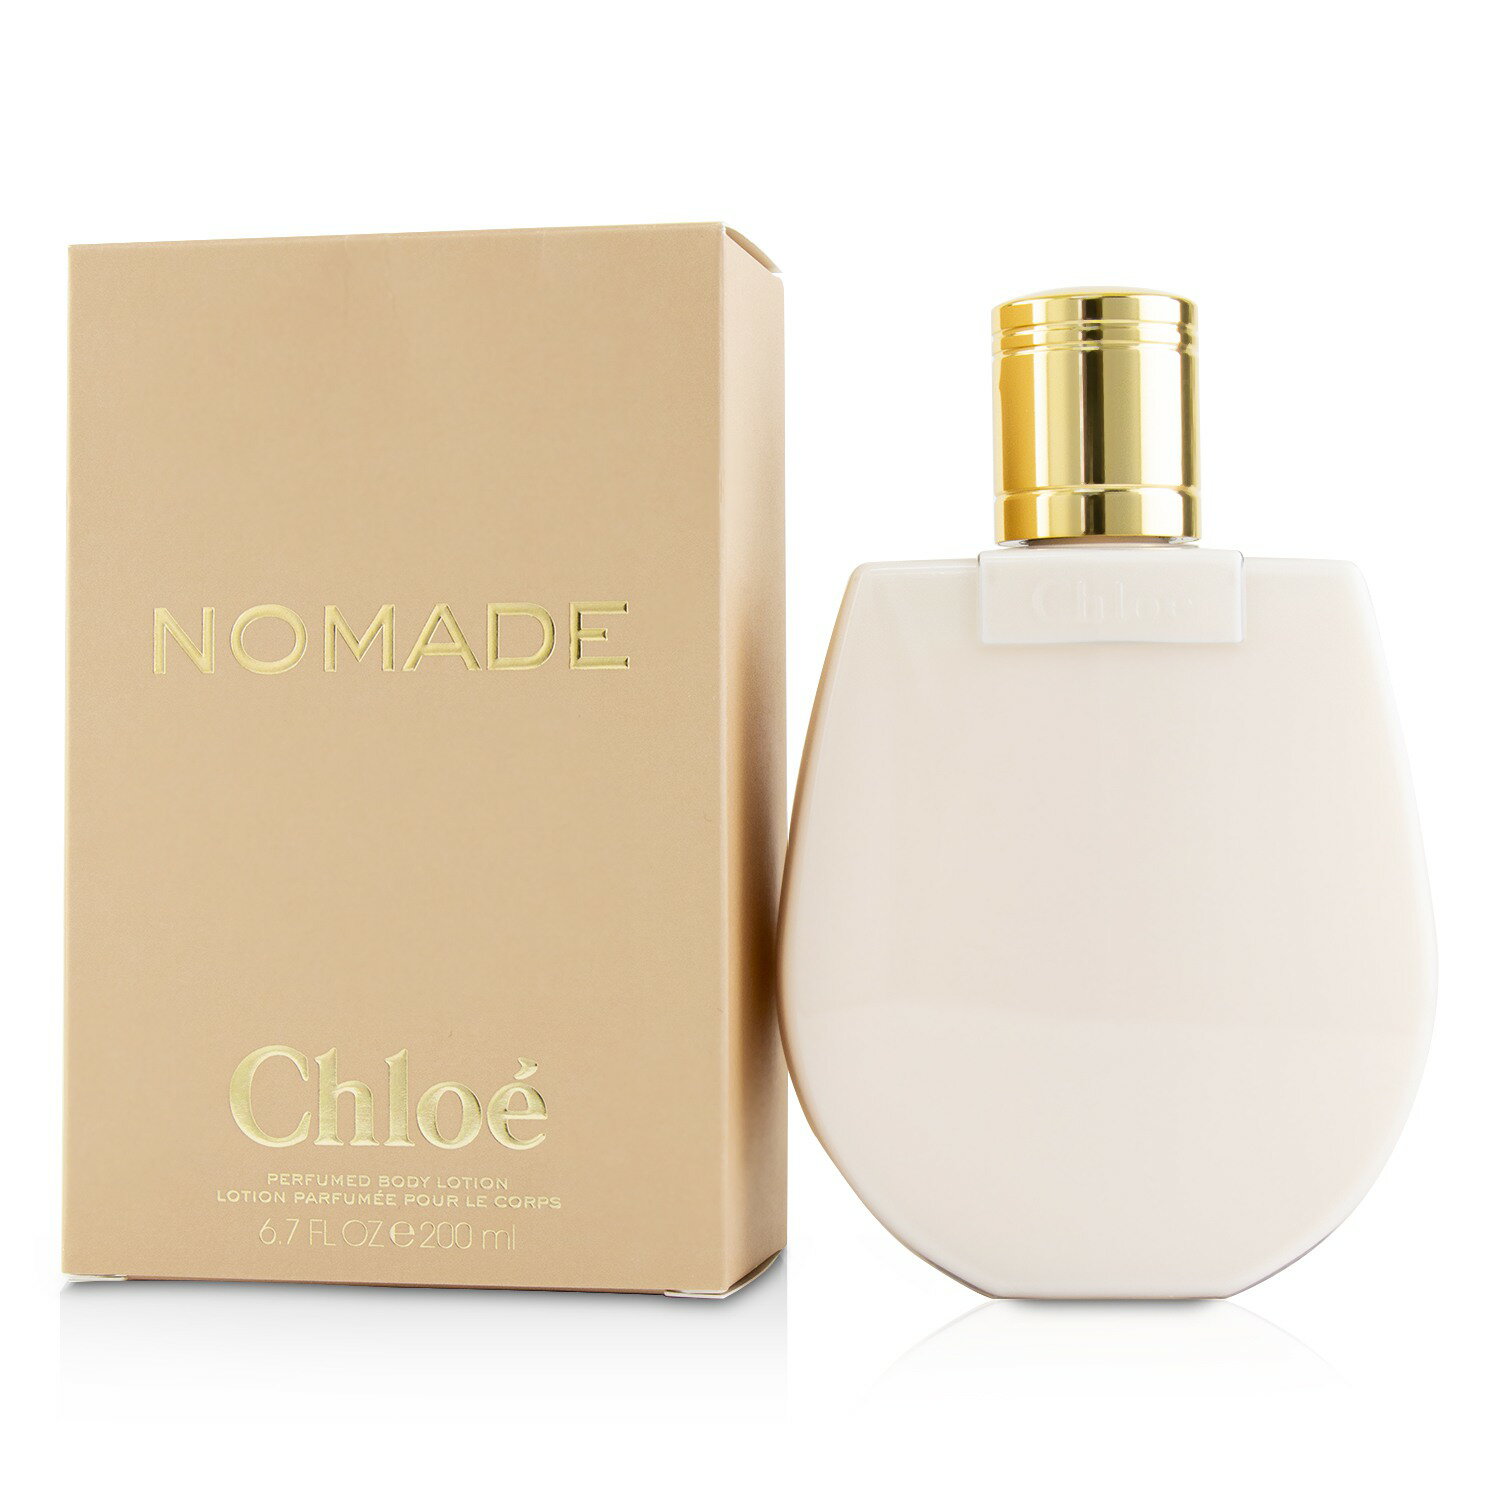 蔻依 Chloe - Nomade 芳心之旅香氛身體乳液 Nomade Perfumed Body Lotion